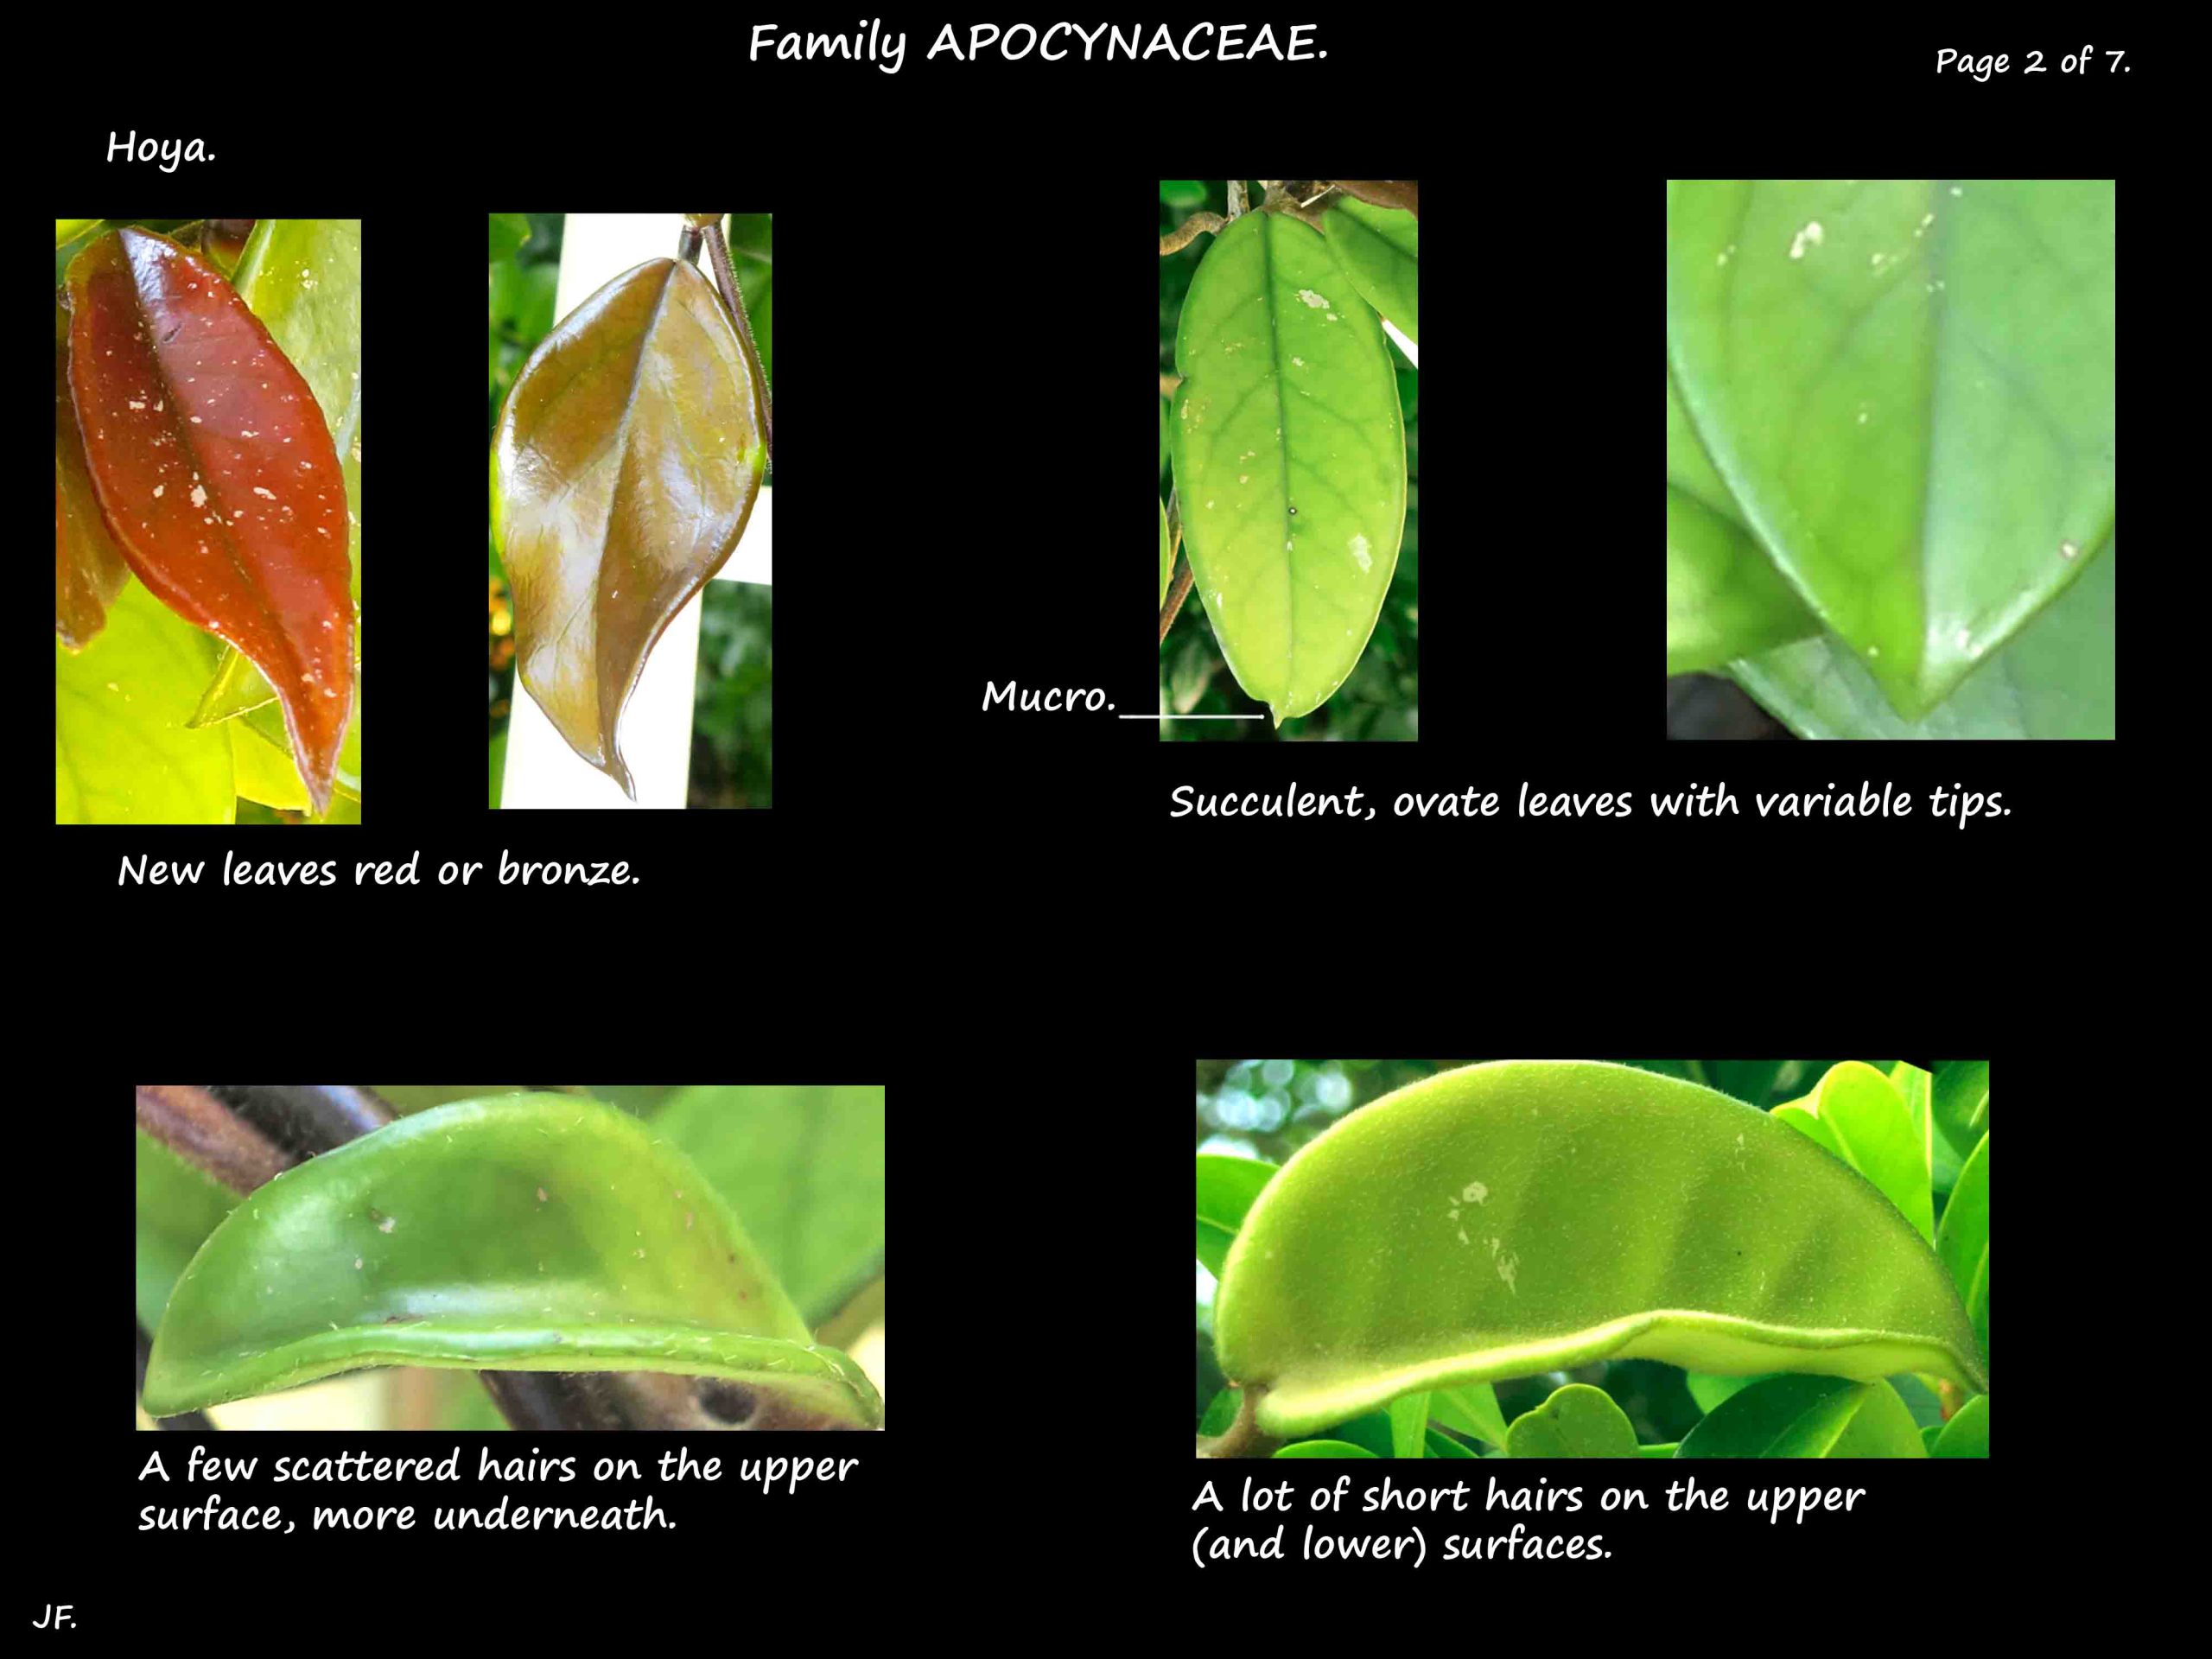 2 Hoya leaves